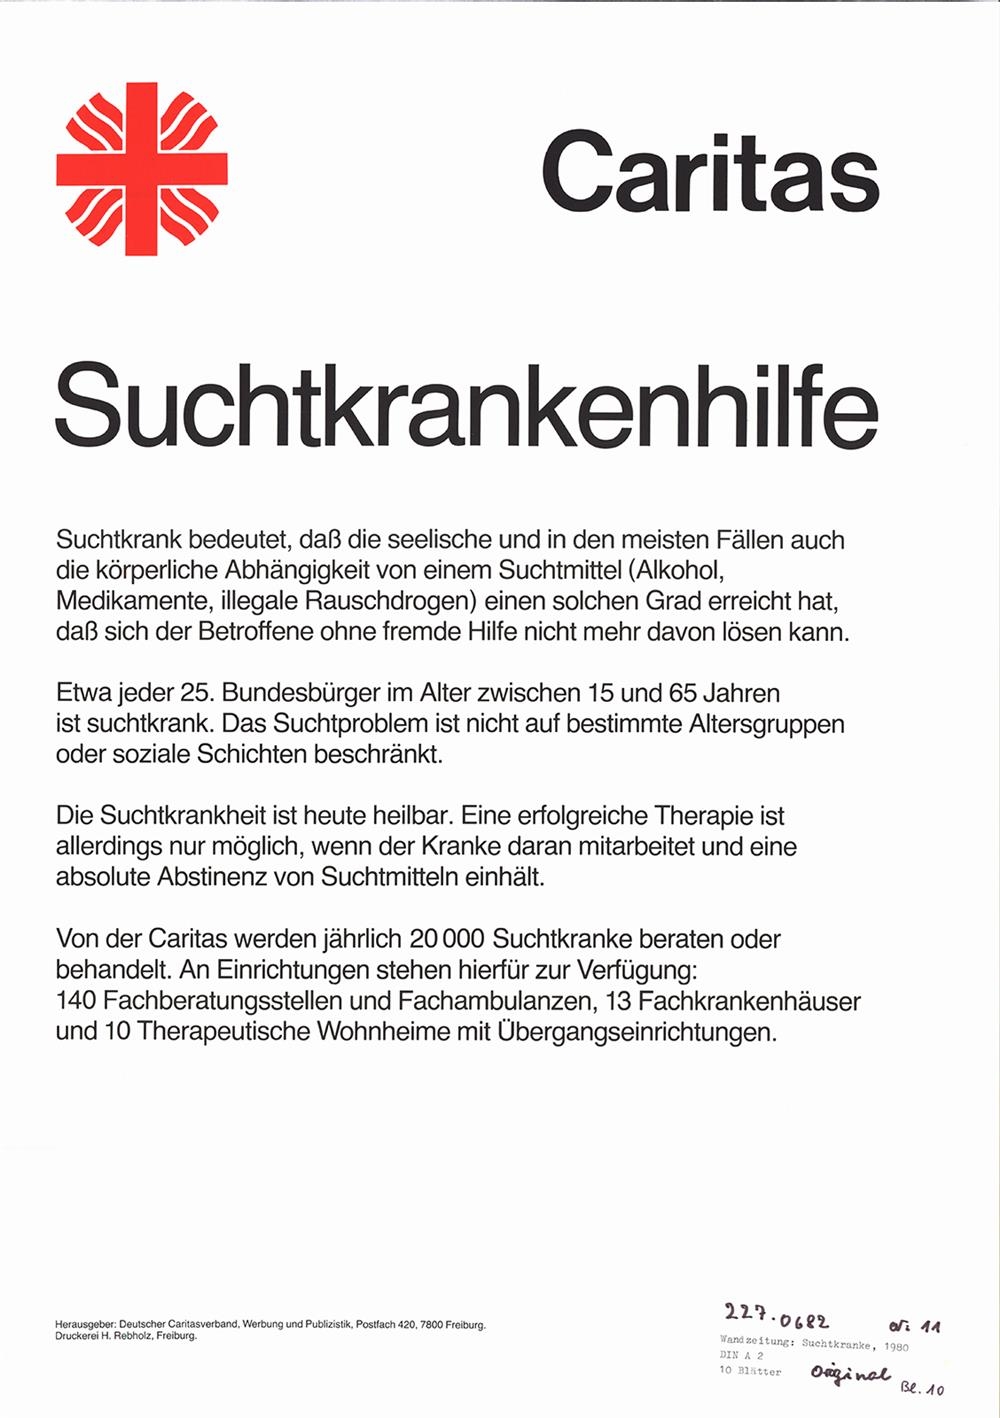 Suchtkrankenhilfe. Poster der Drogenberatung der Caritas (1980) (Deutscher Caritasverband e. V.)